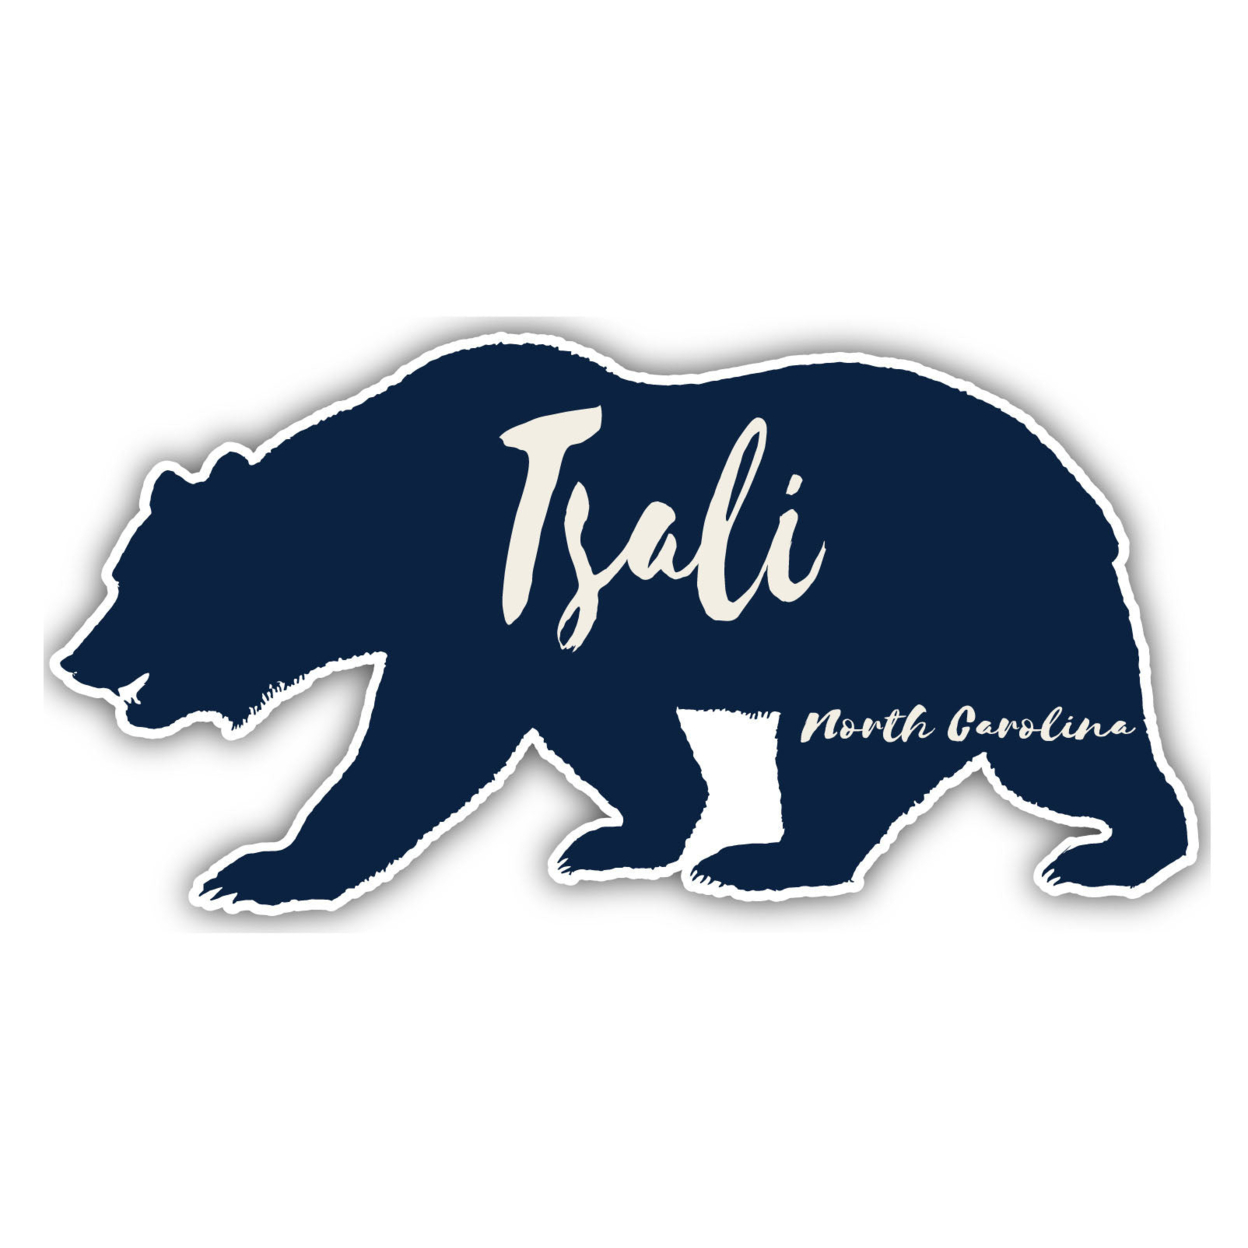 Tsali North Carolina Souvenir Decorative Stickers (Choose Theme And Size) - Single Unit, 4-Inch, Bear